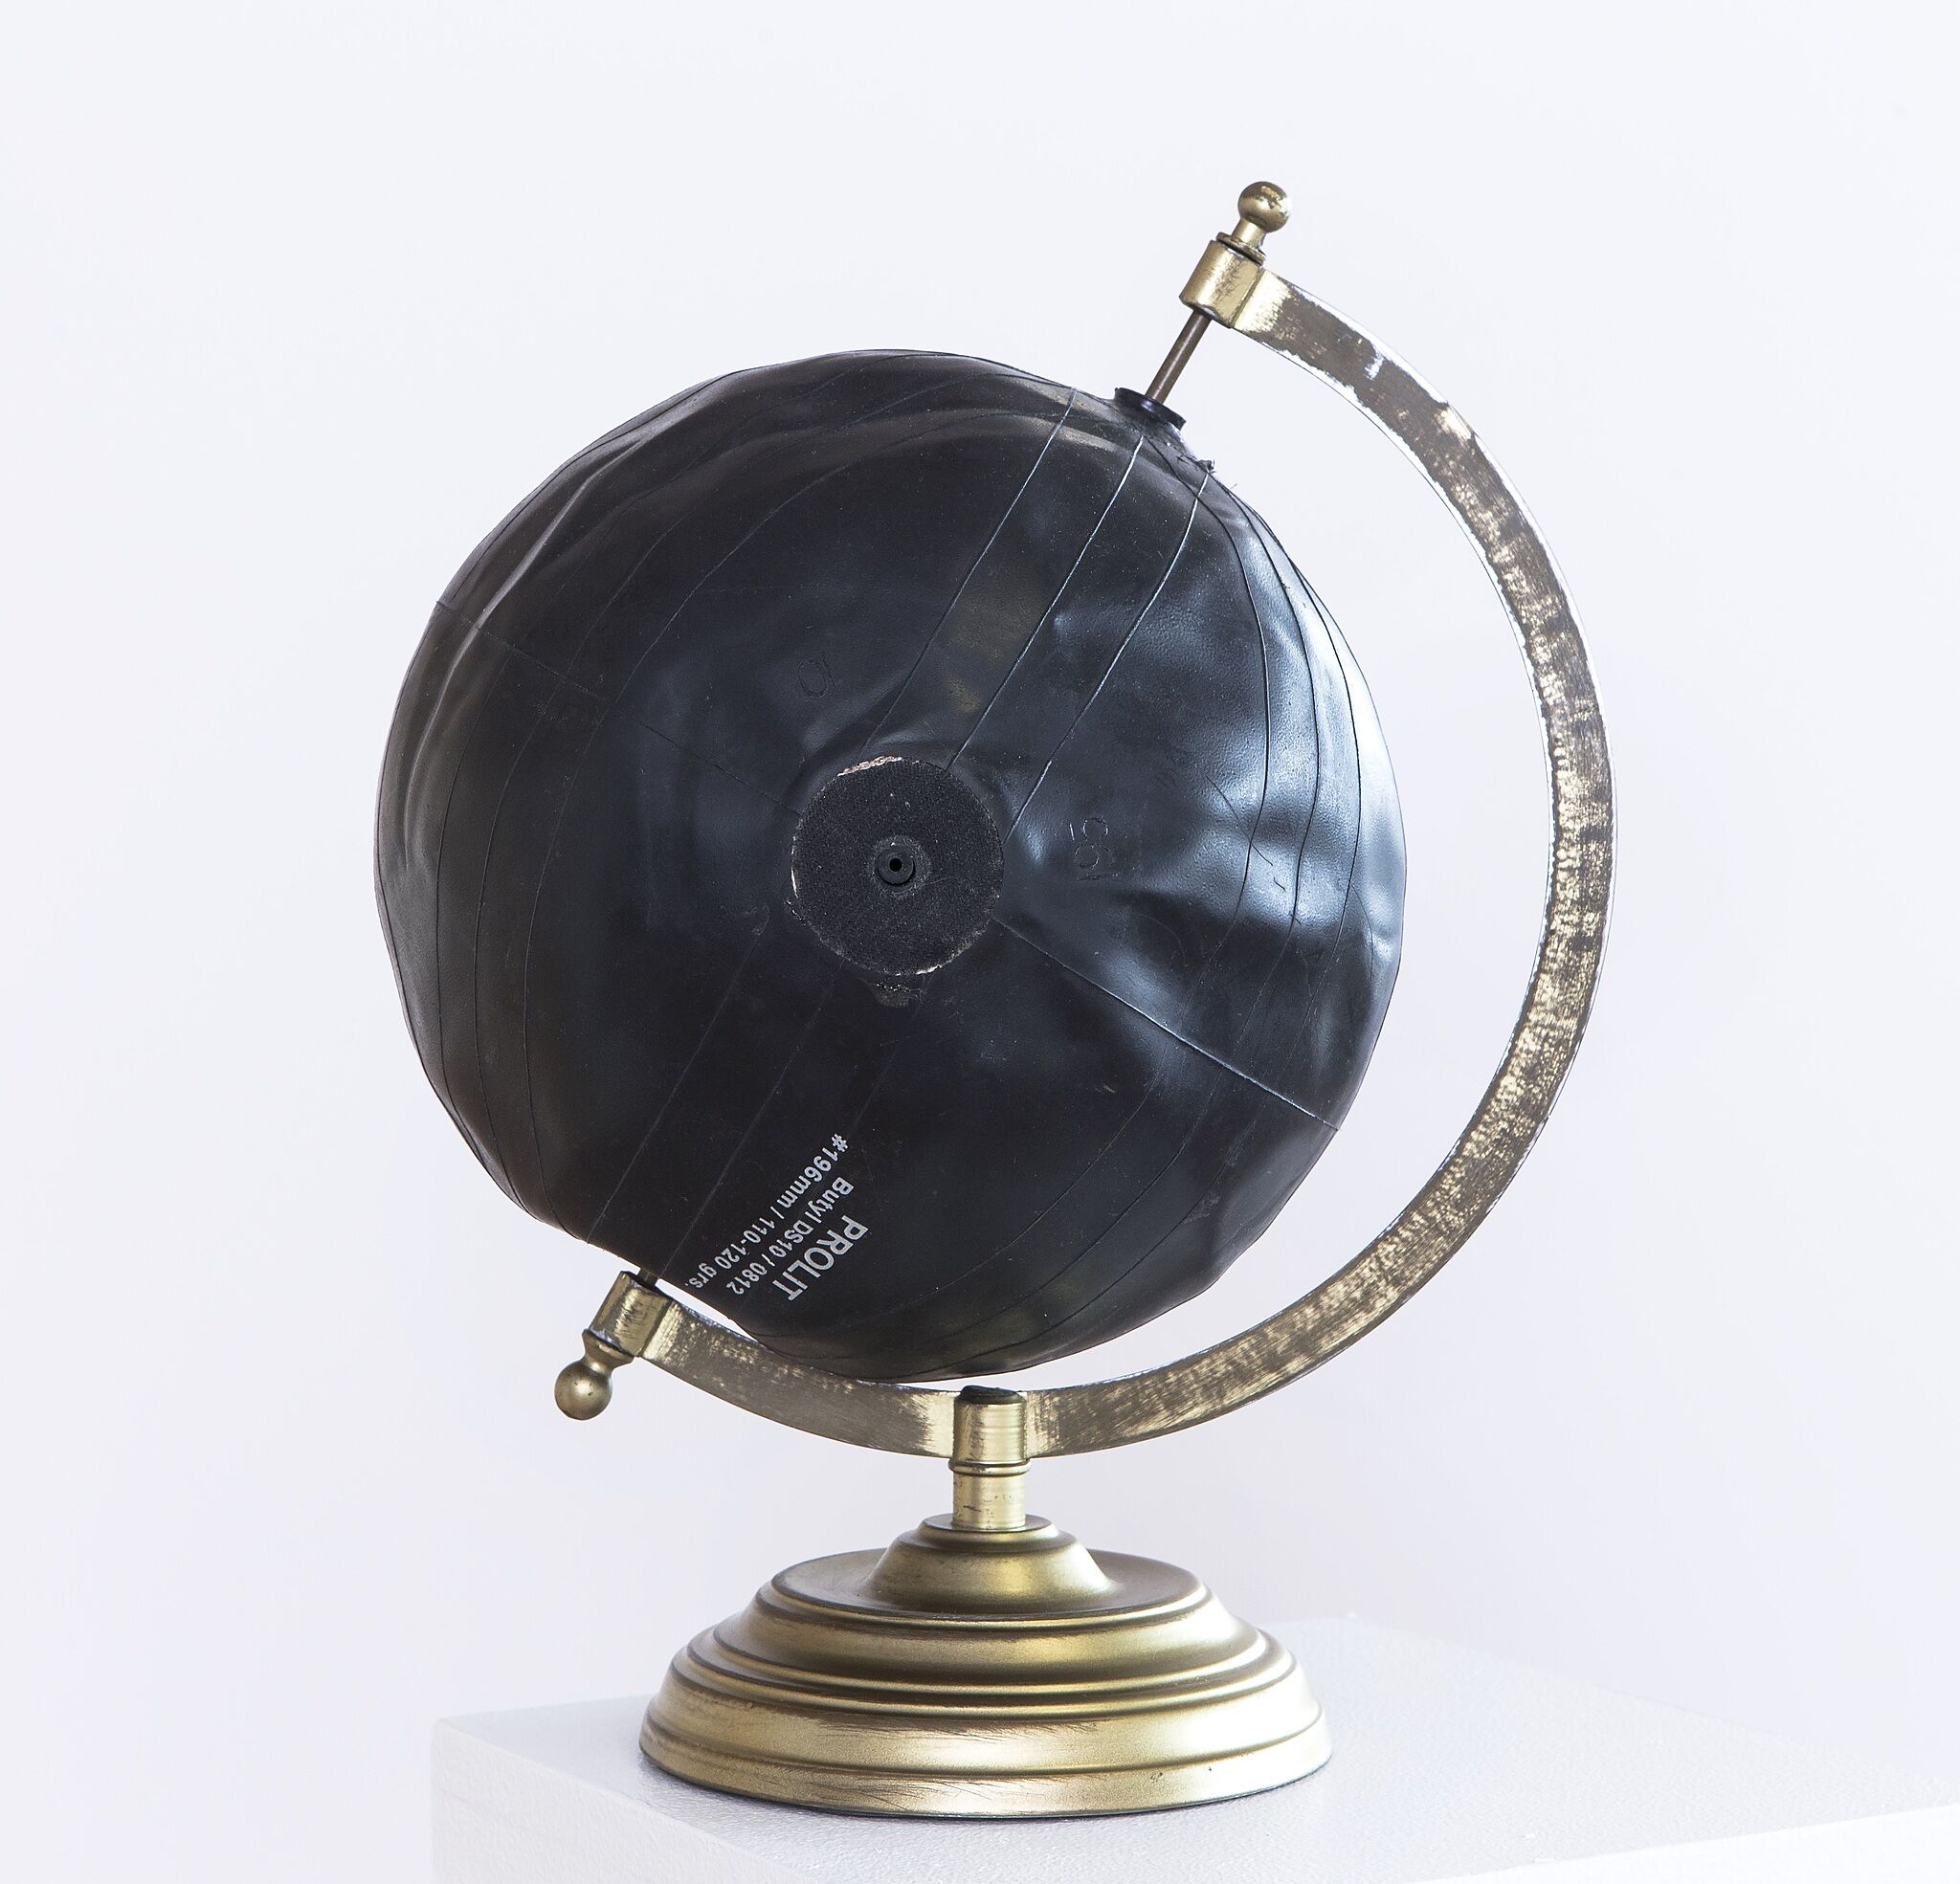 A black soccer ball as a globe. 